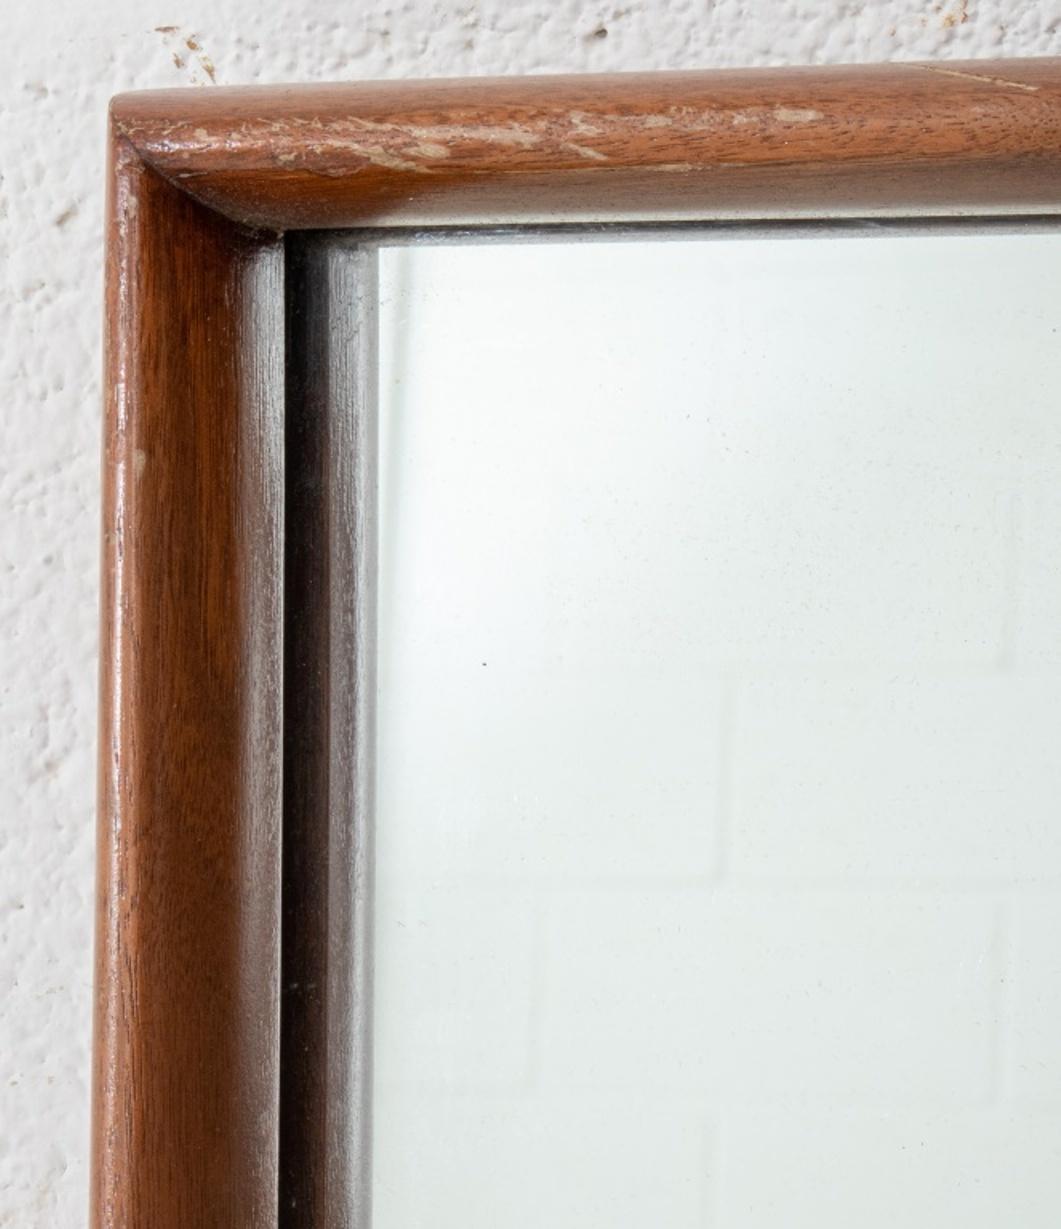 Mid-Century Modern John Widdicomb rectangular walnut framed mirror, Widdicomb label to reverse.

Dimensions: 33